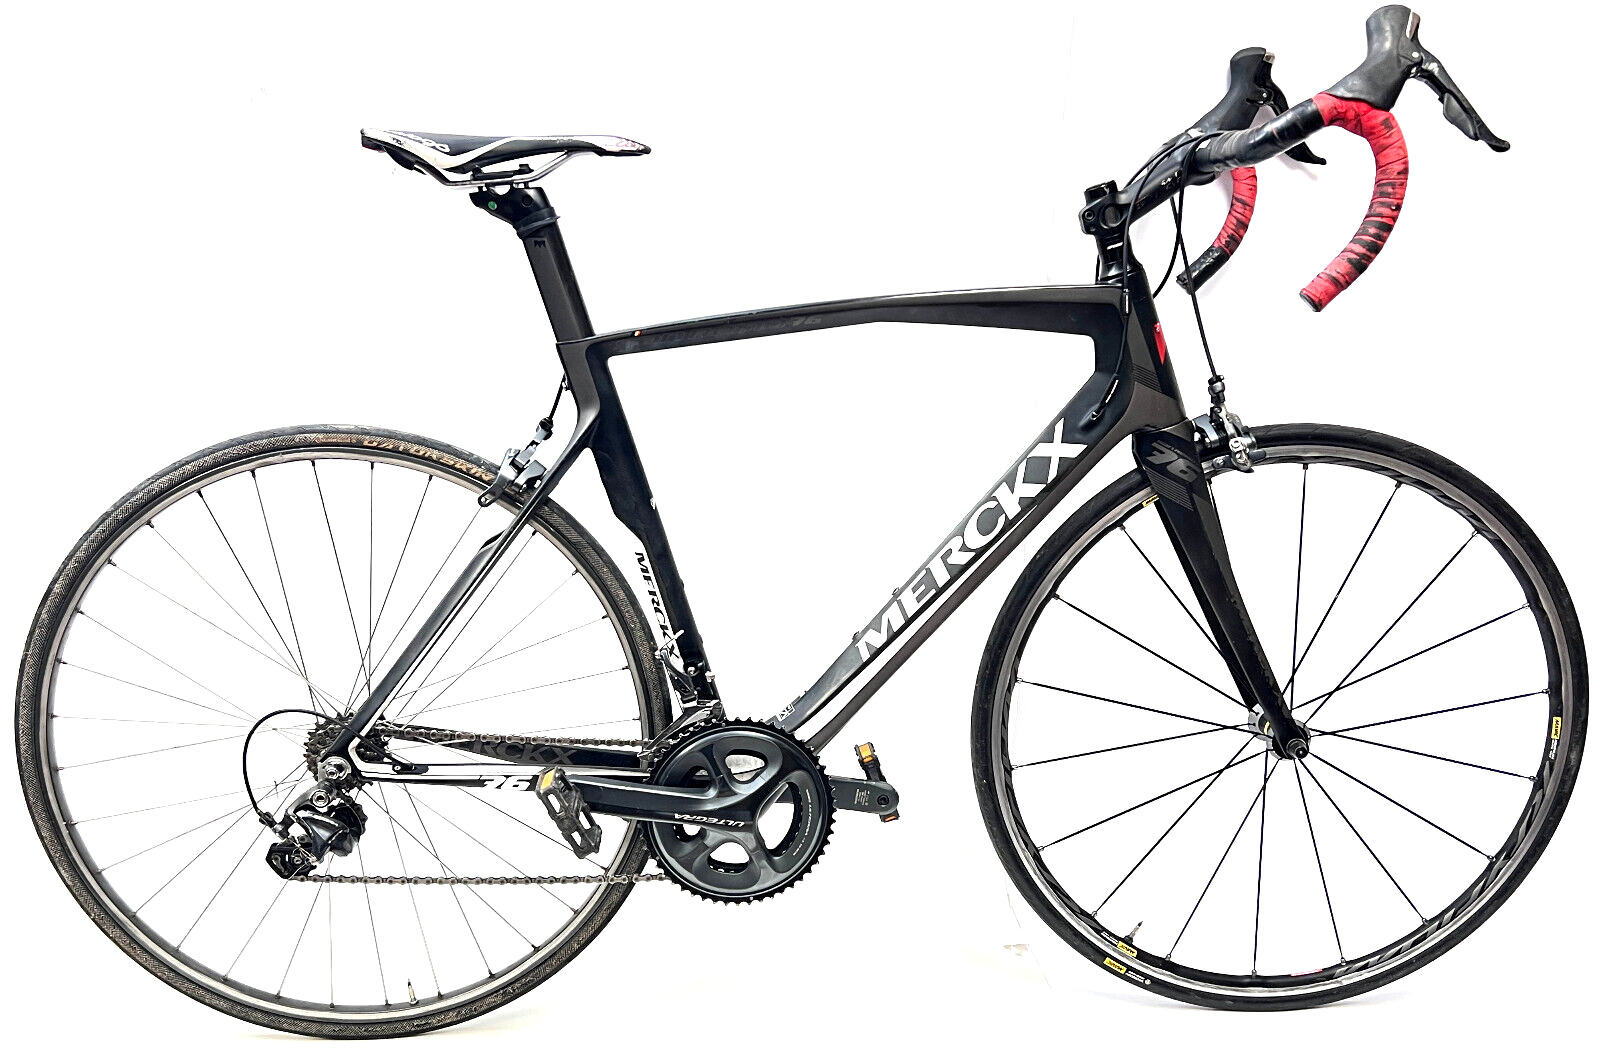 Eddy MERCKX San Remo 76 Ultegra 11S Carbon Road Racing Bike 56 cm, $7k msrp